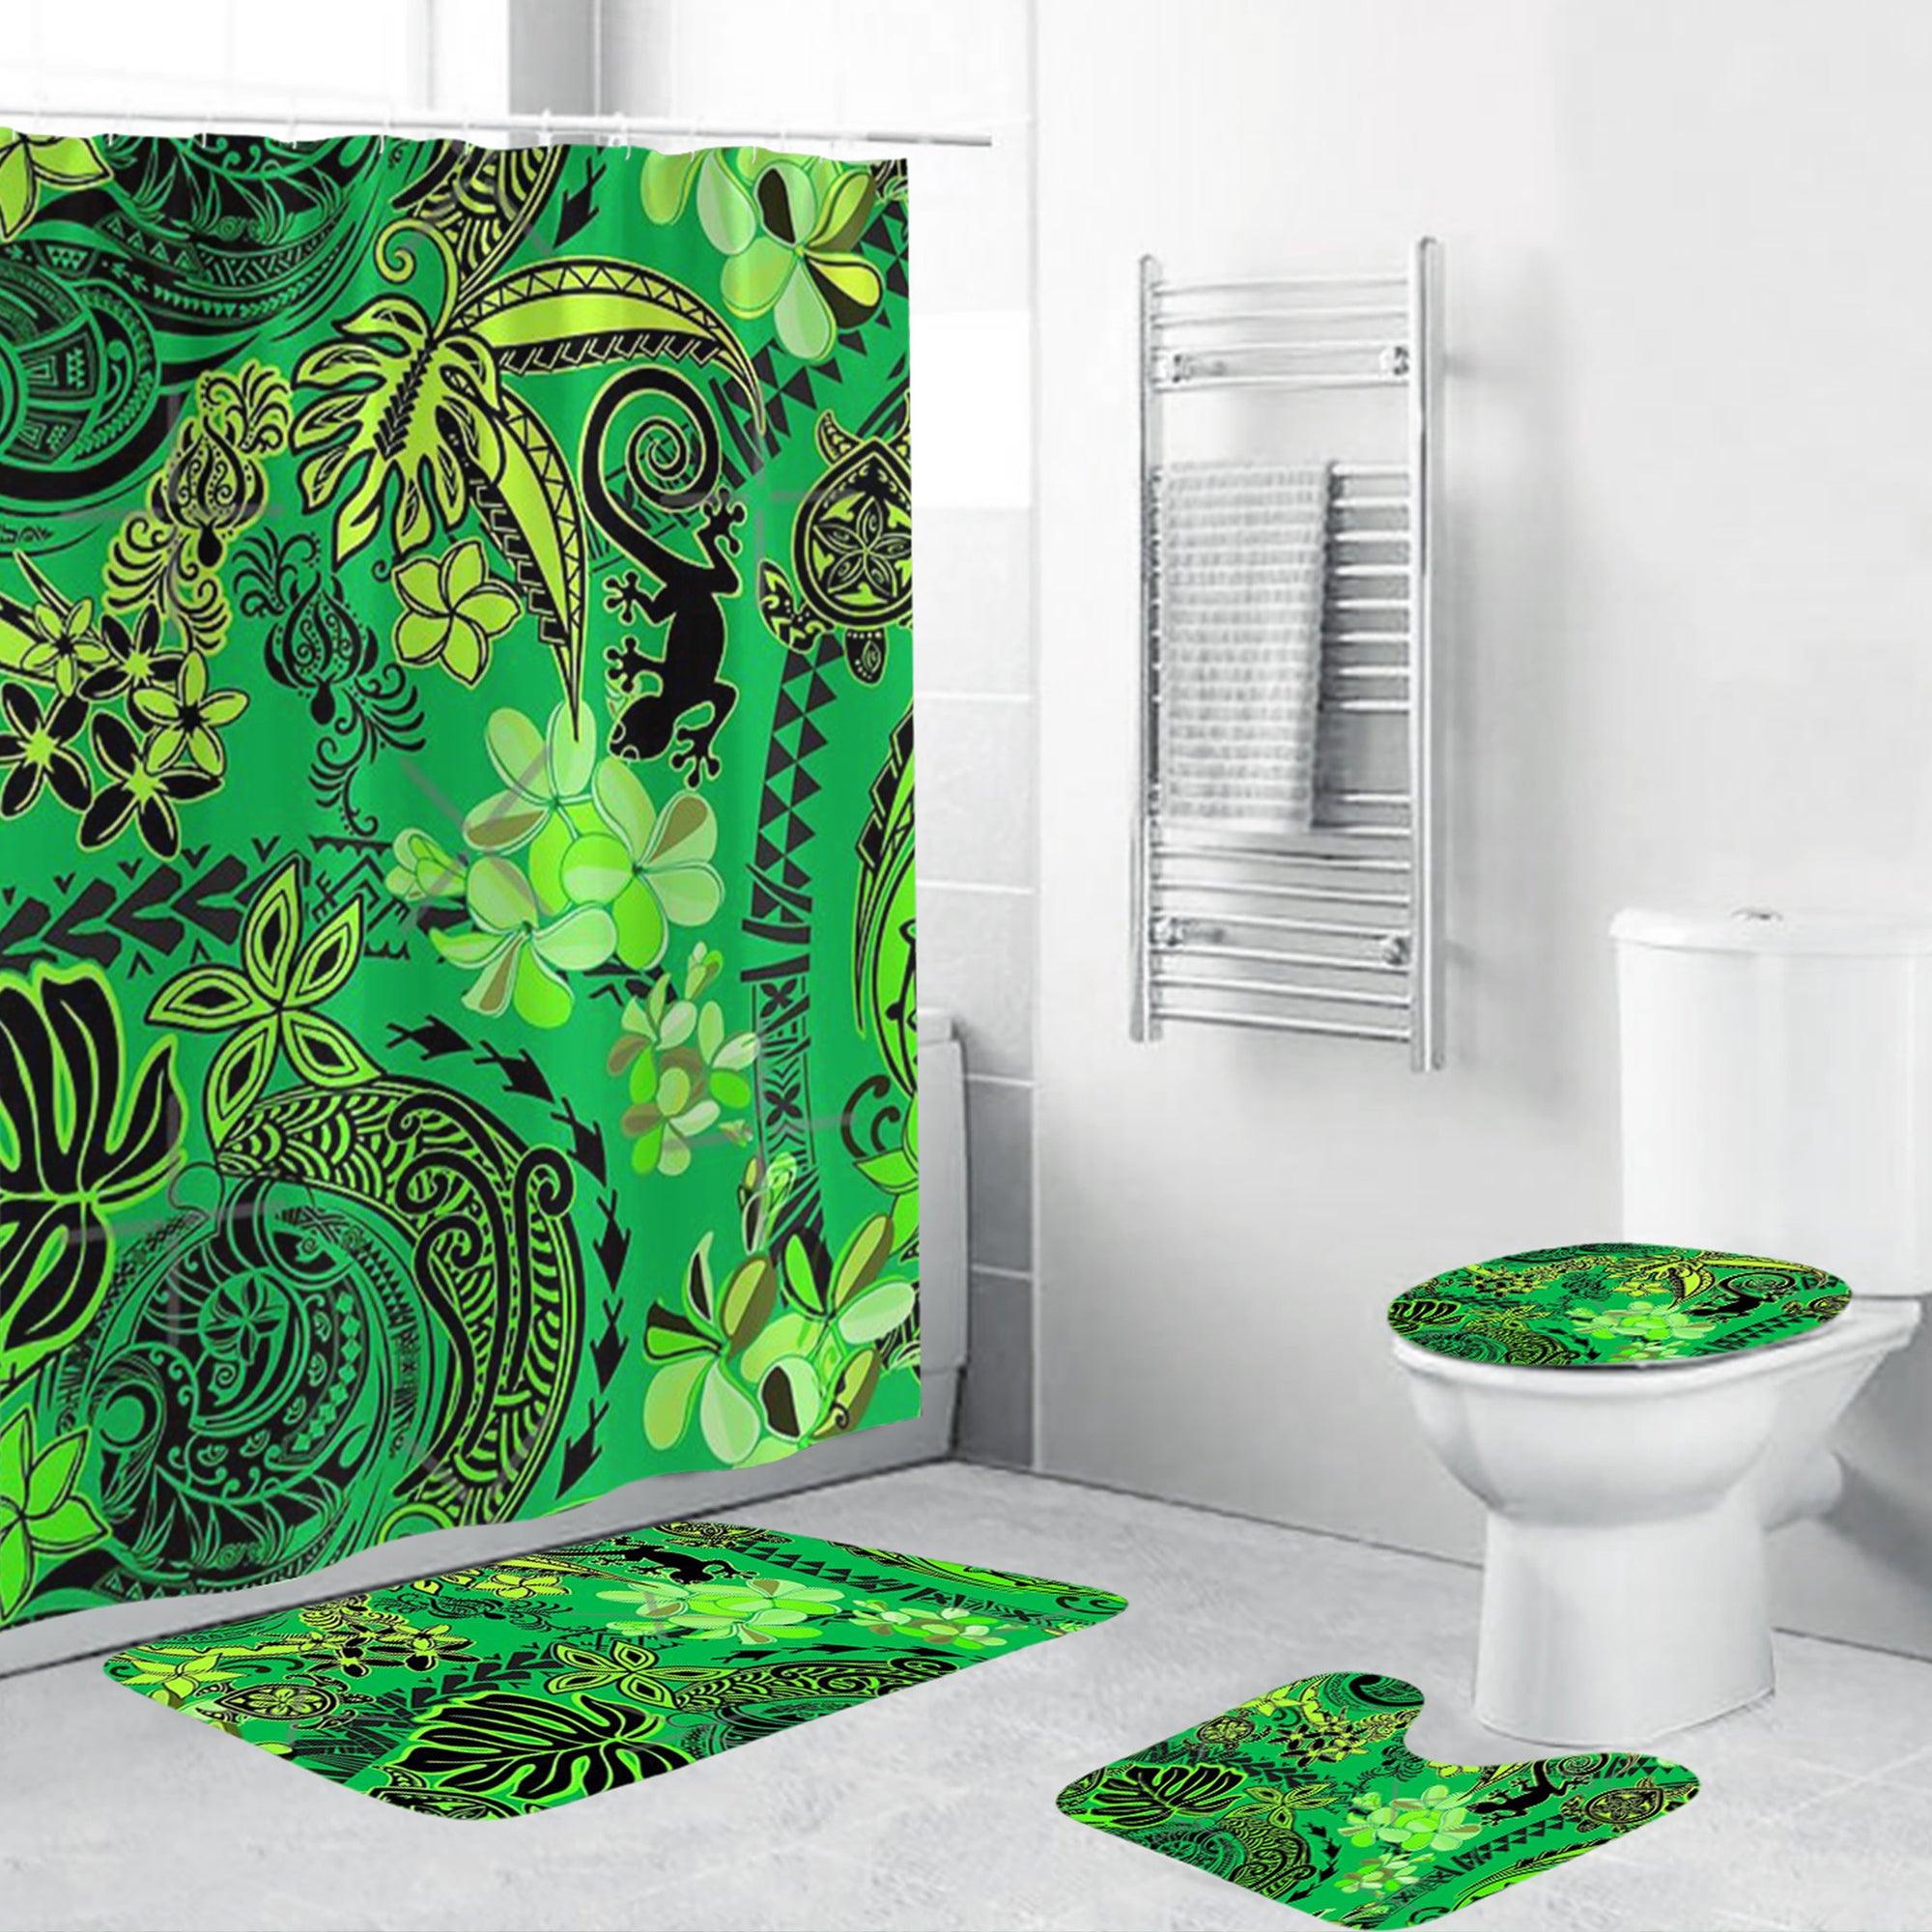 Polynesian Home Set - Kiwi Green Lanai Tribal Jungle Bathroom Set LT10 Green - Polynesian Pride